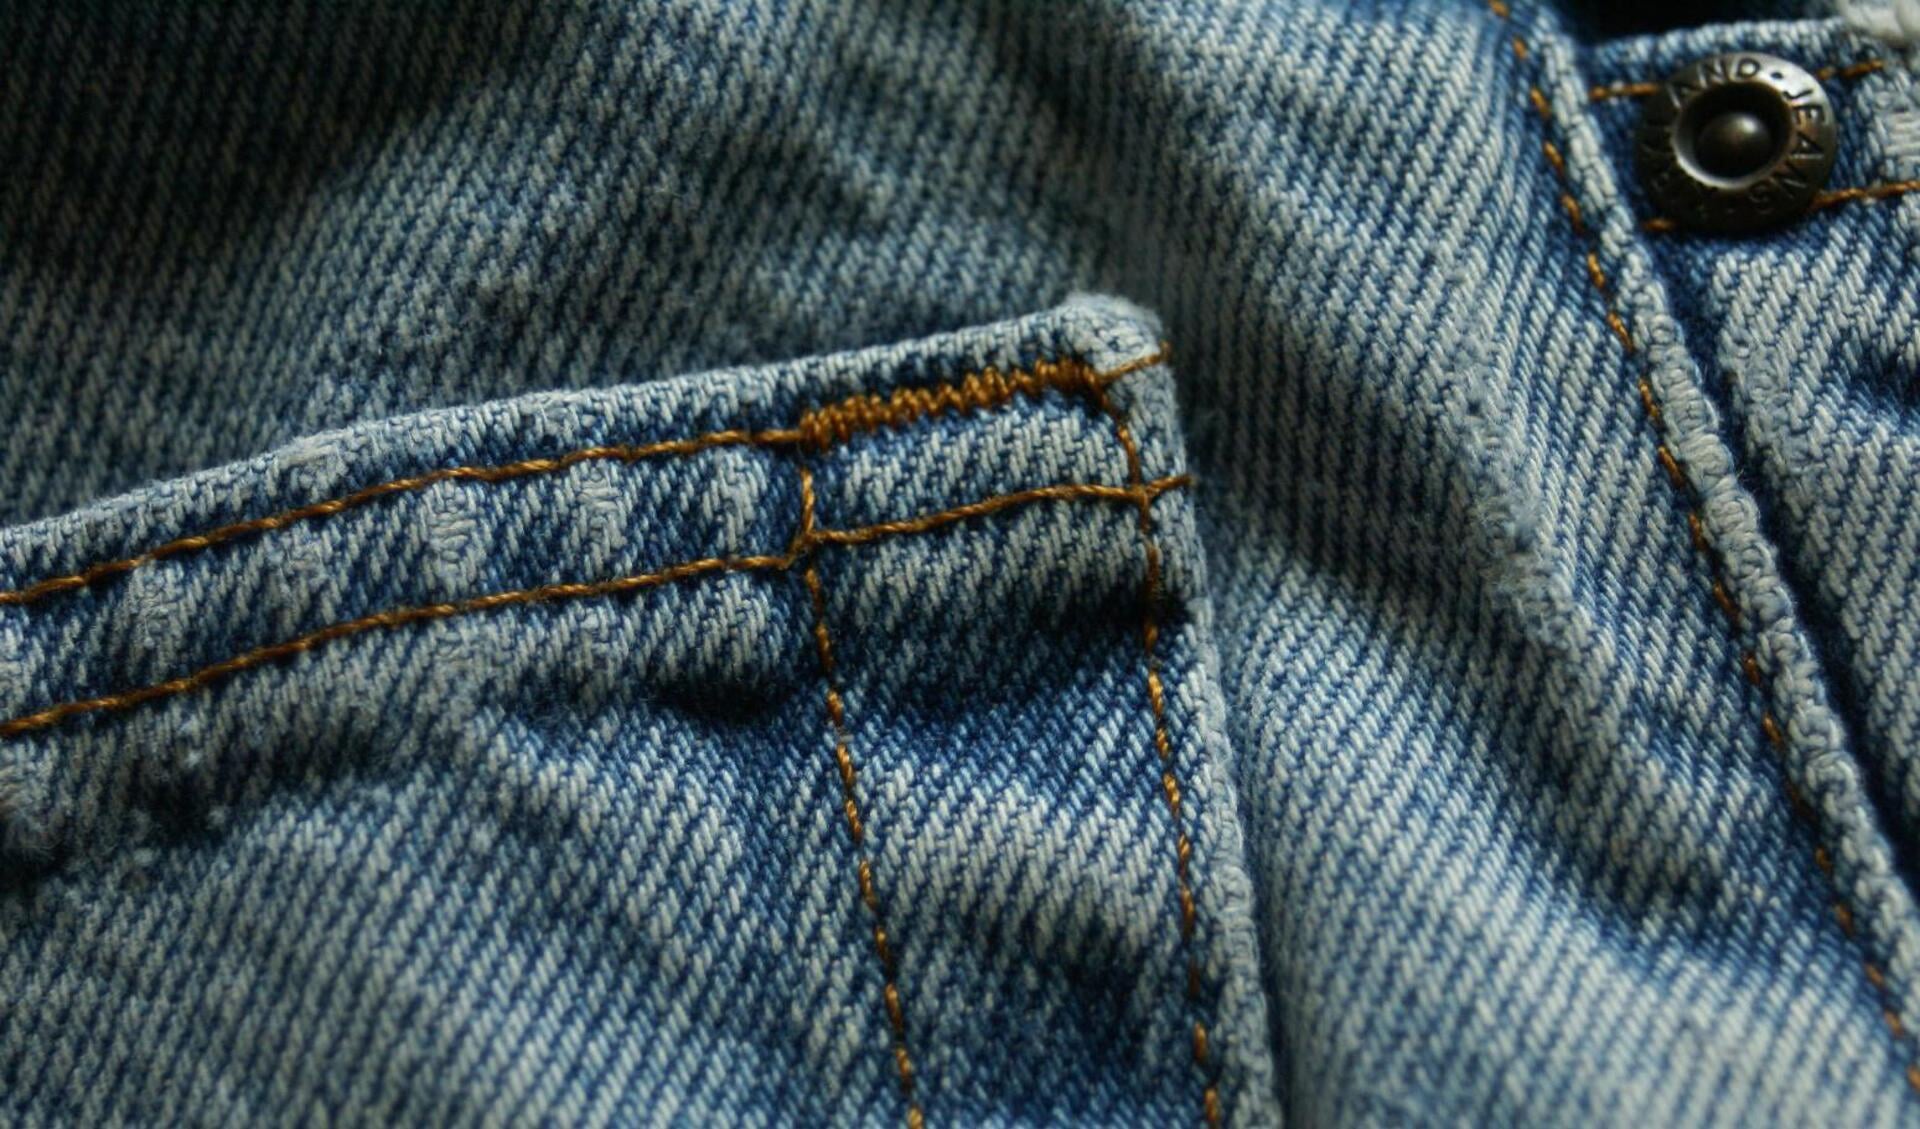 kleding-broek-jeans-inzamelingsactie-kledinginzameling-inzameling